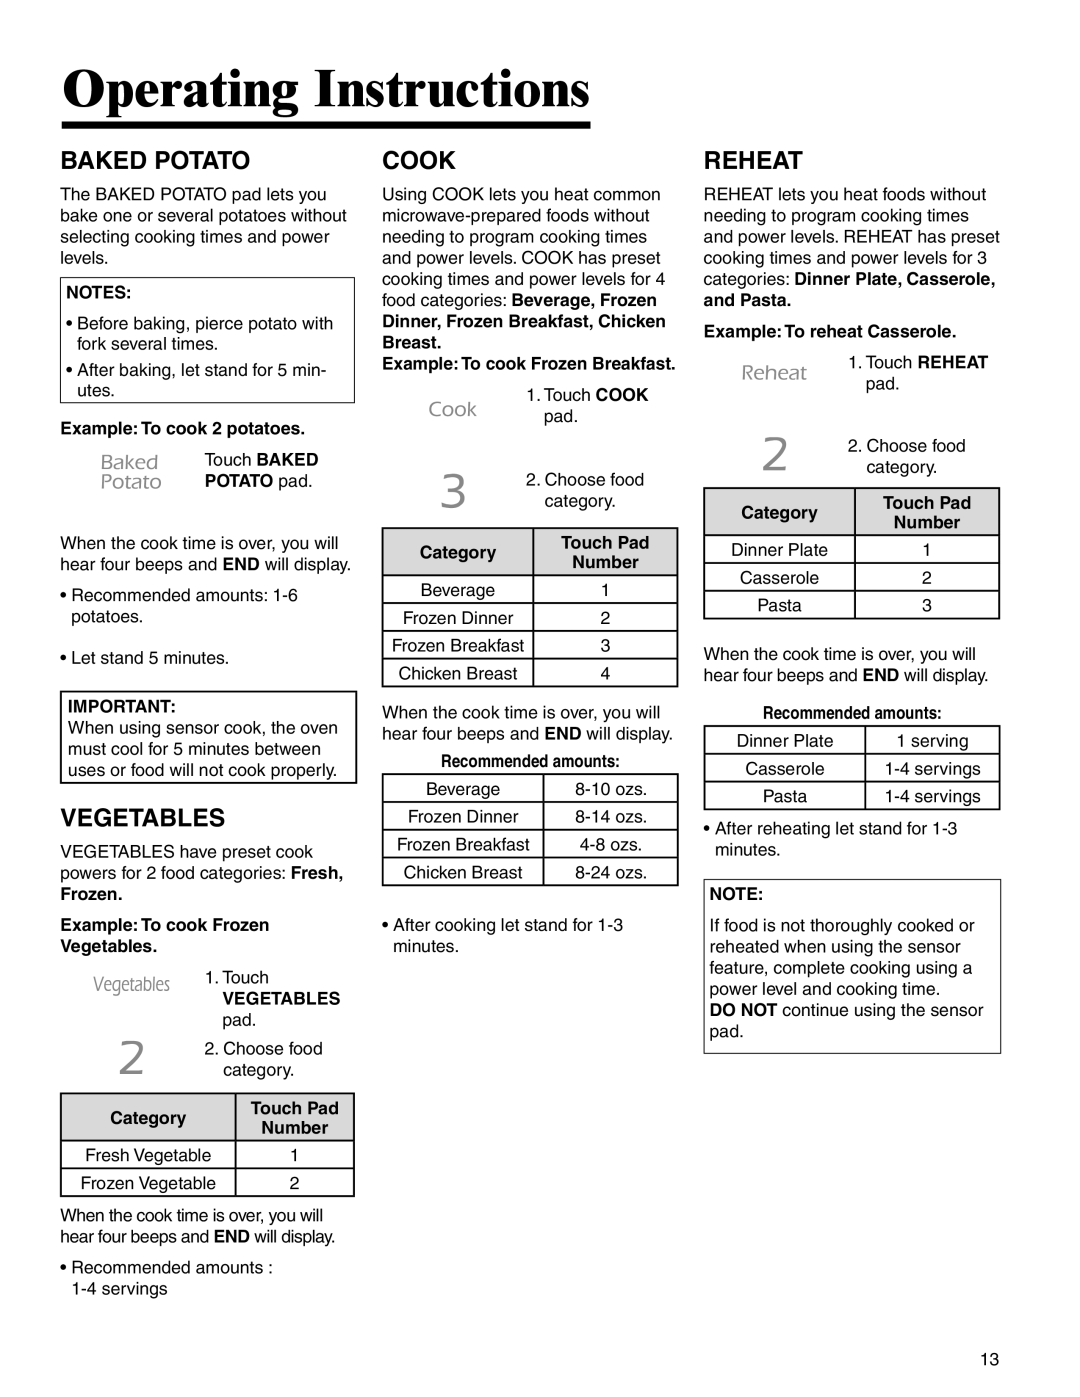 Amana AMC2206BA important safety instructions Baked Potato, Vegetables, Cook, Reheat, Operating Instructions 